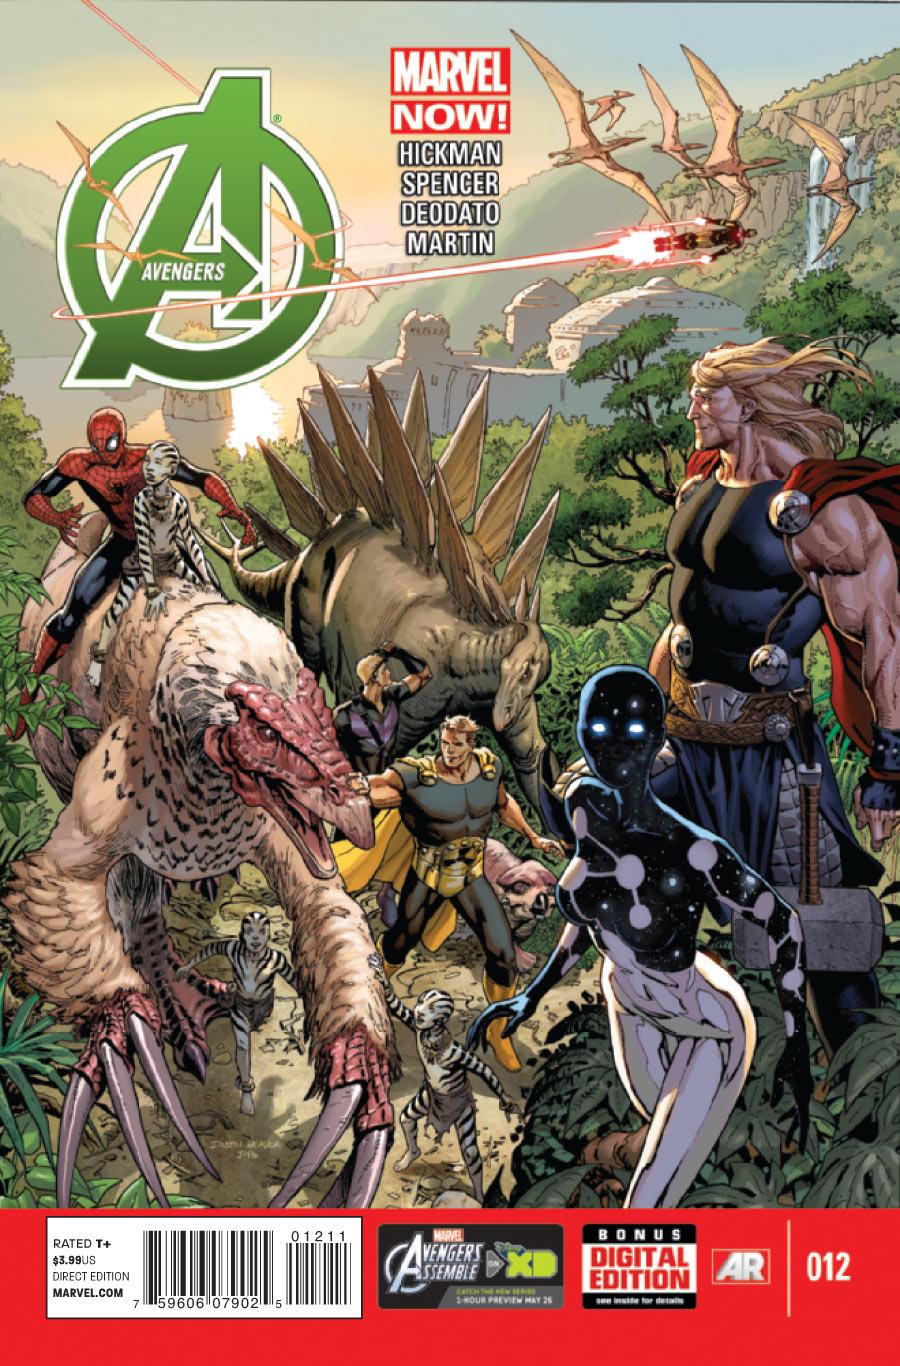 The Avengers Vol. 5 #12